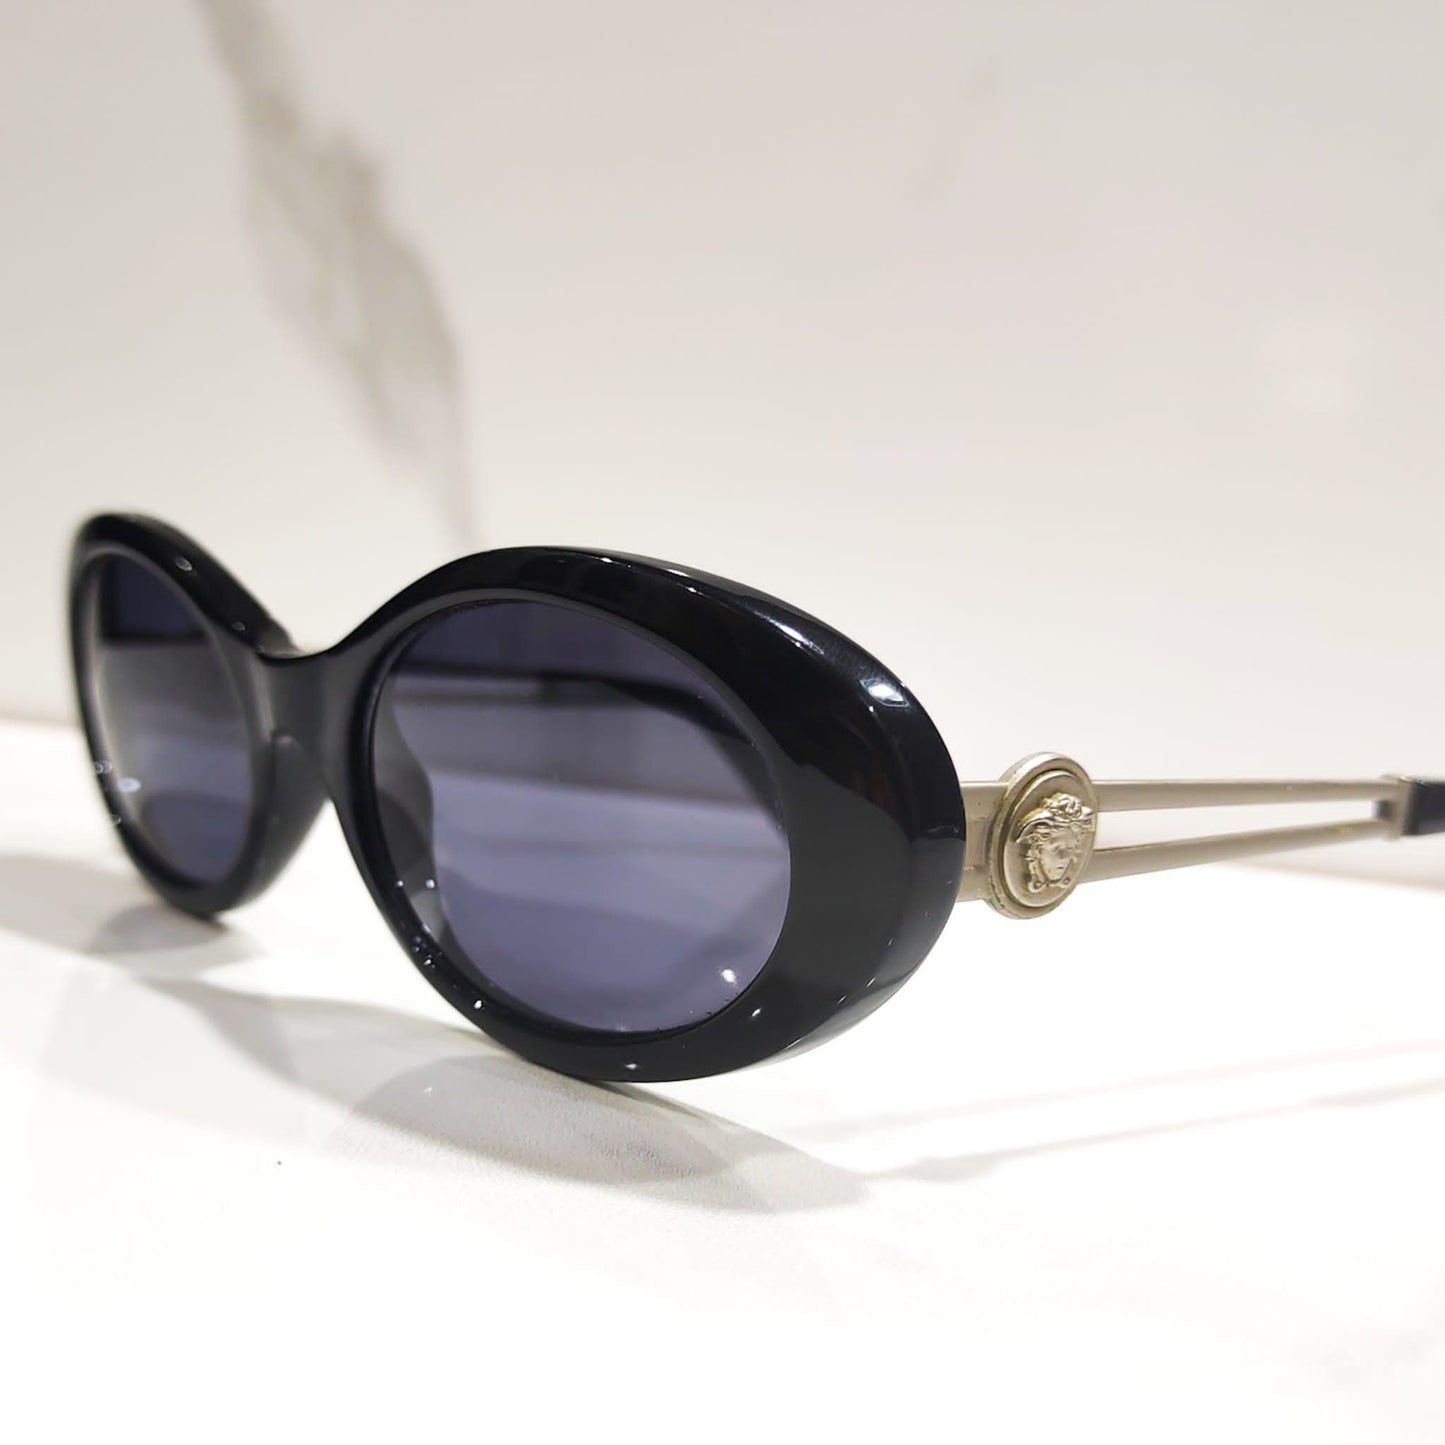 Gianni Versace 342 vintage lunetta brille occhiali anni '90